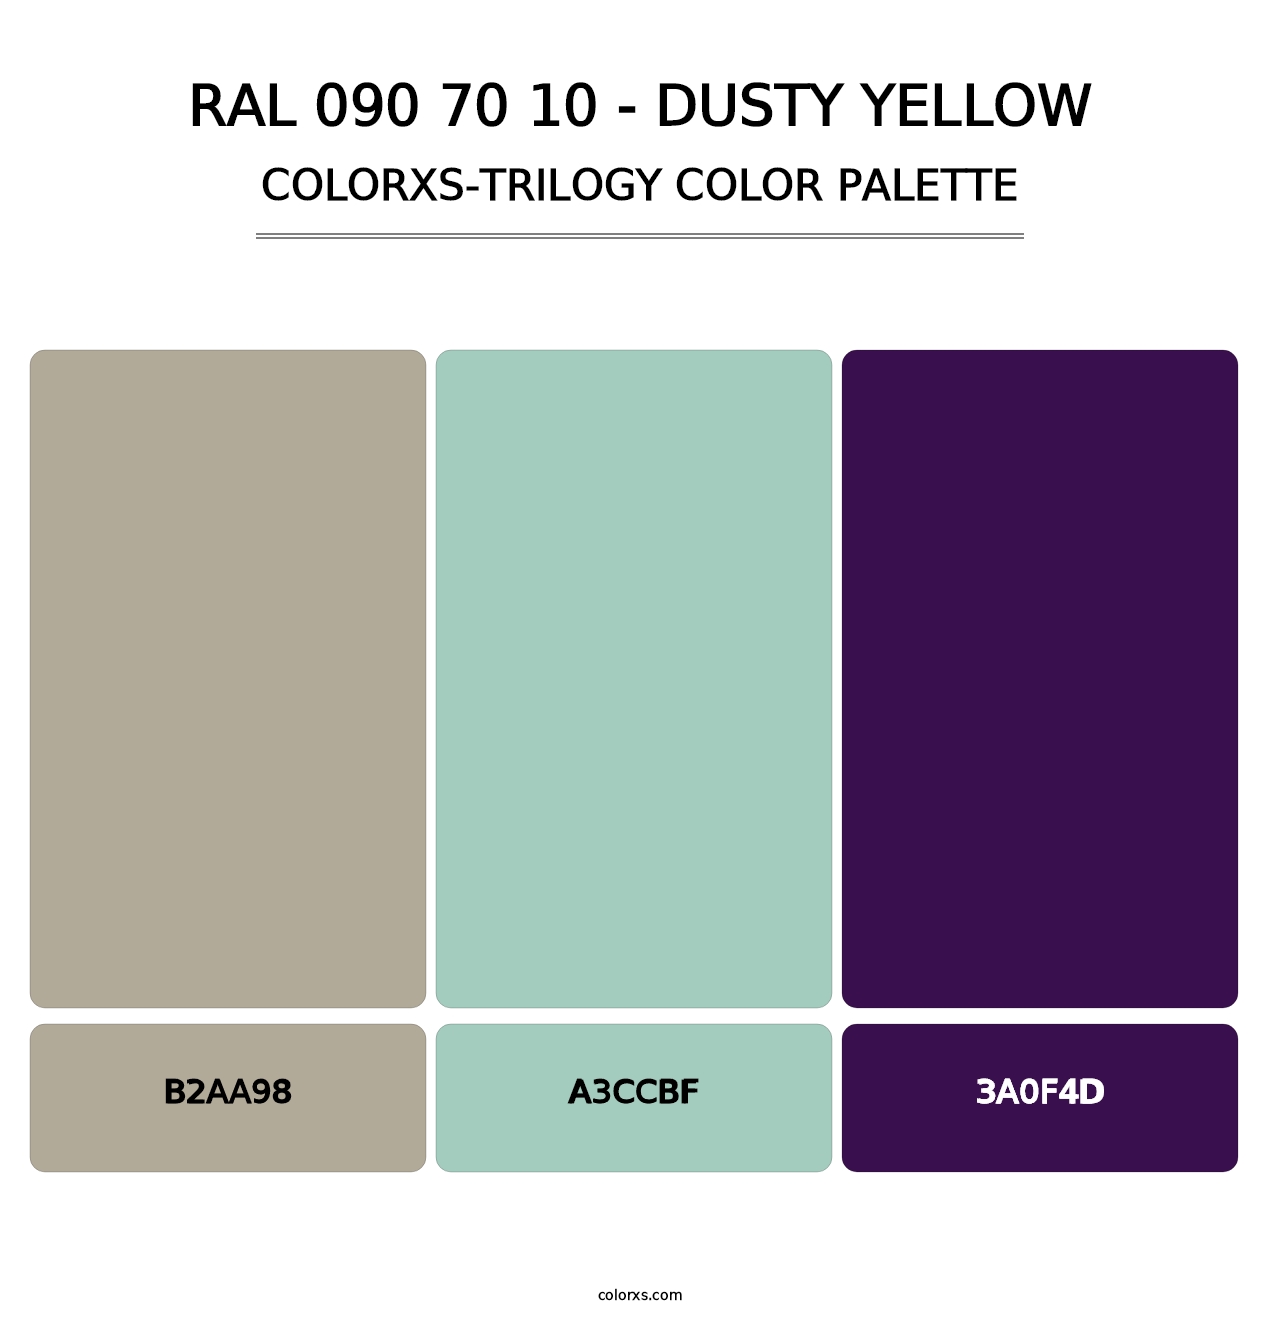 RAL 090 70 10 - Dusty Yellow - Colorxs Trilogy Palette